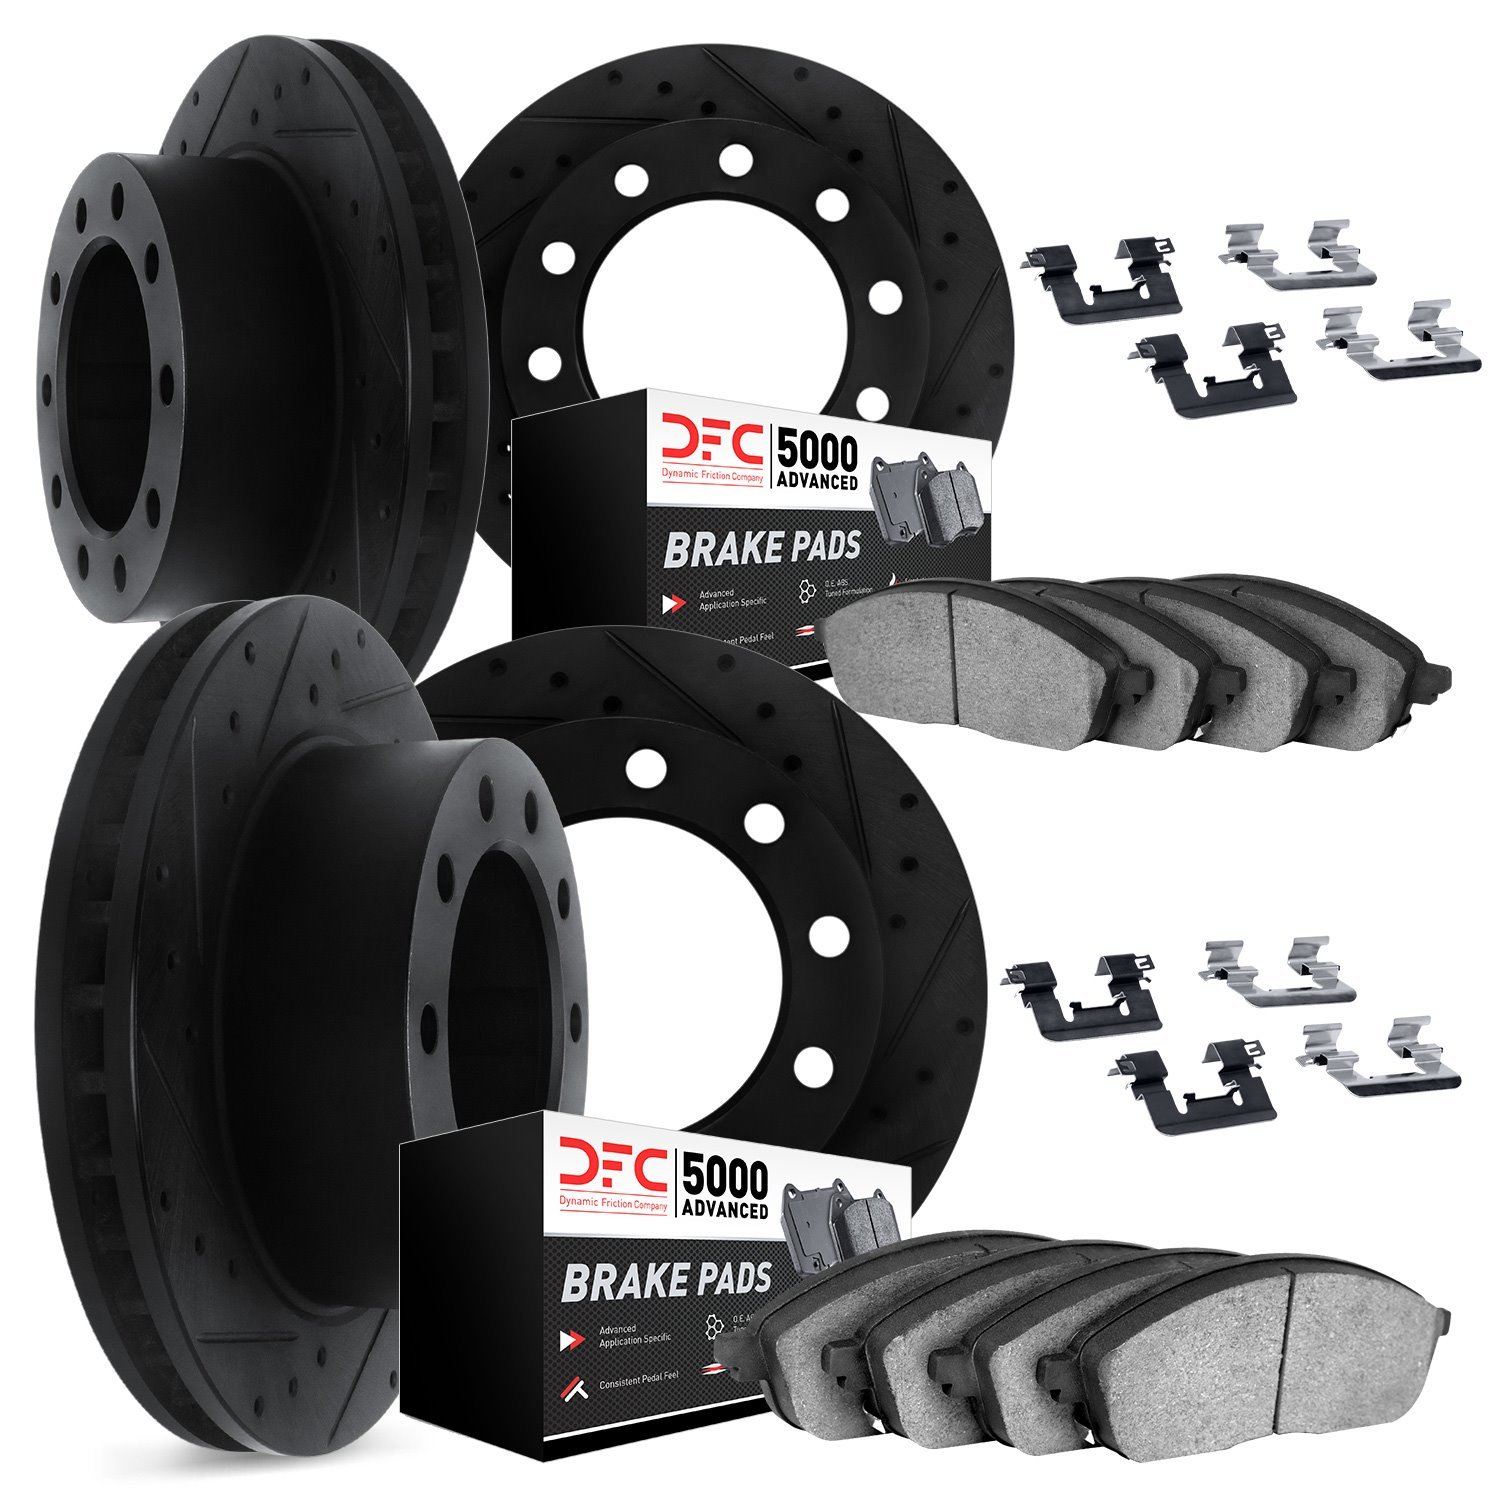 8514-40249 Drilled/Slotted Brake Rotors w/5000 Advanced Brake Pads Kit & Hardware [Black], 2008-2021 Multiple Makes/Models, Posi